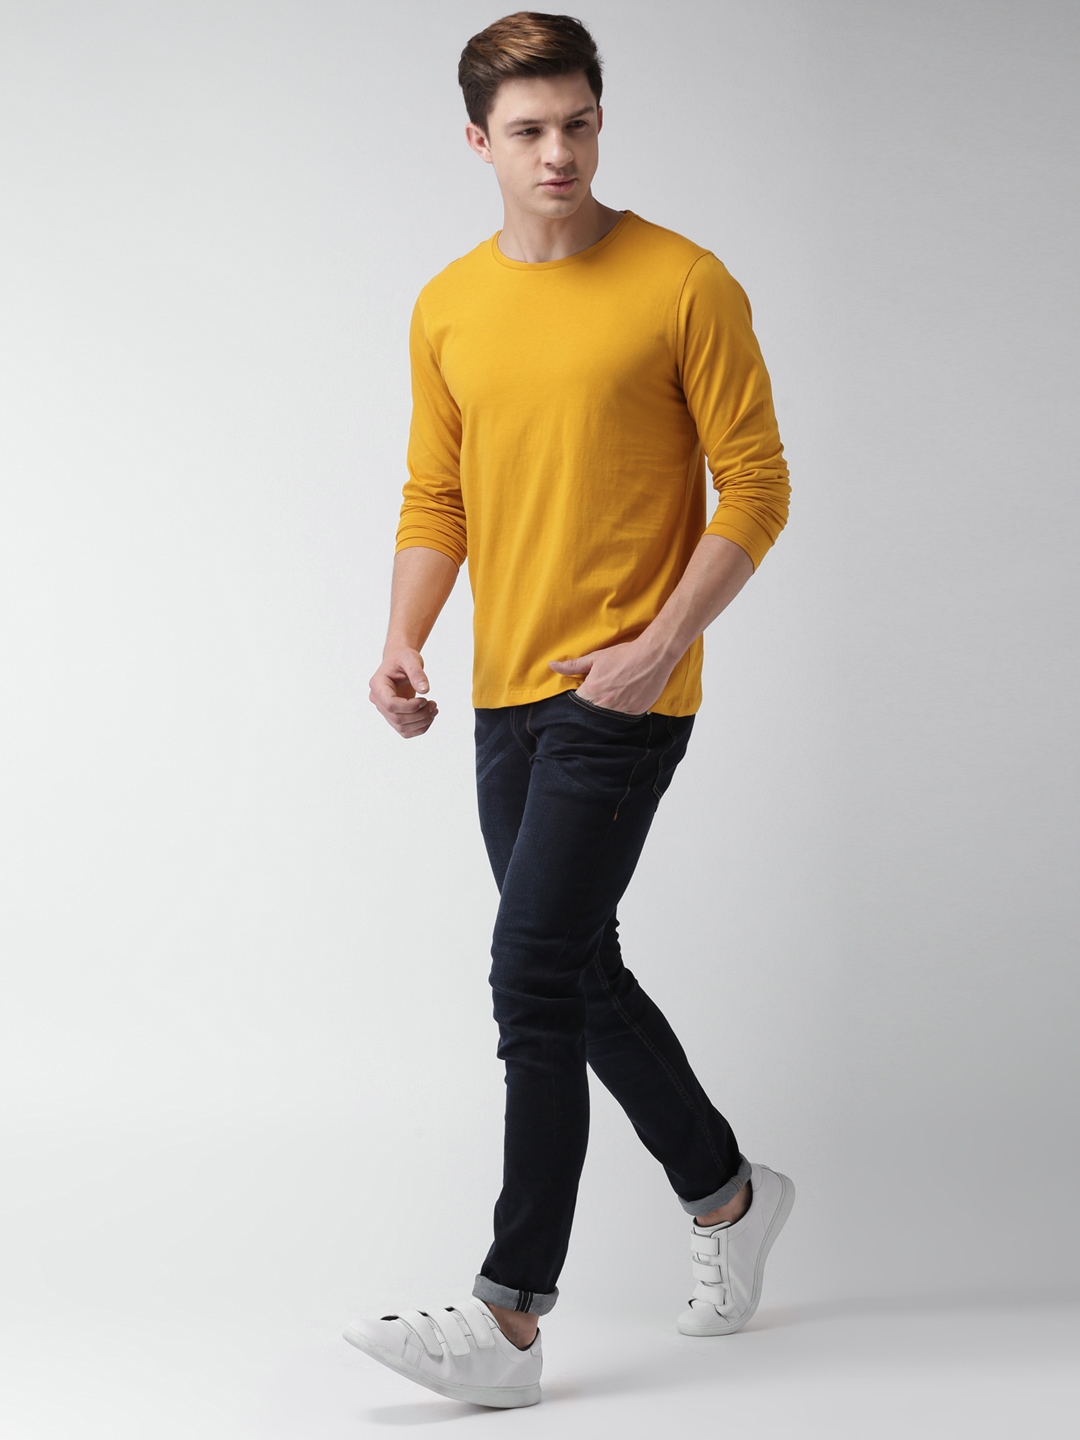 Mustard Yellow Tee Shirt – denspatinderhand